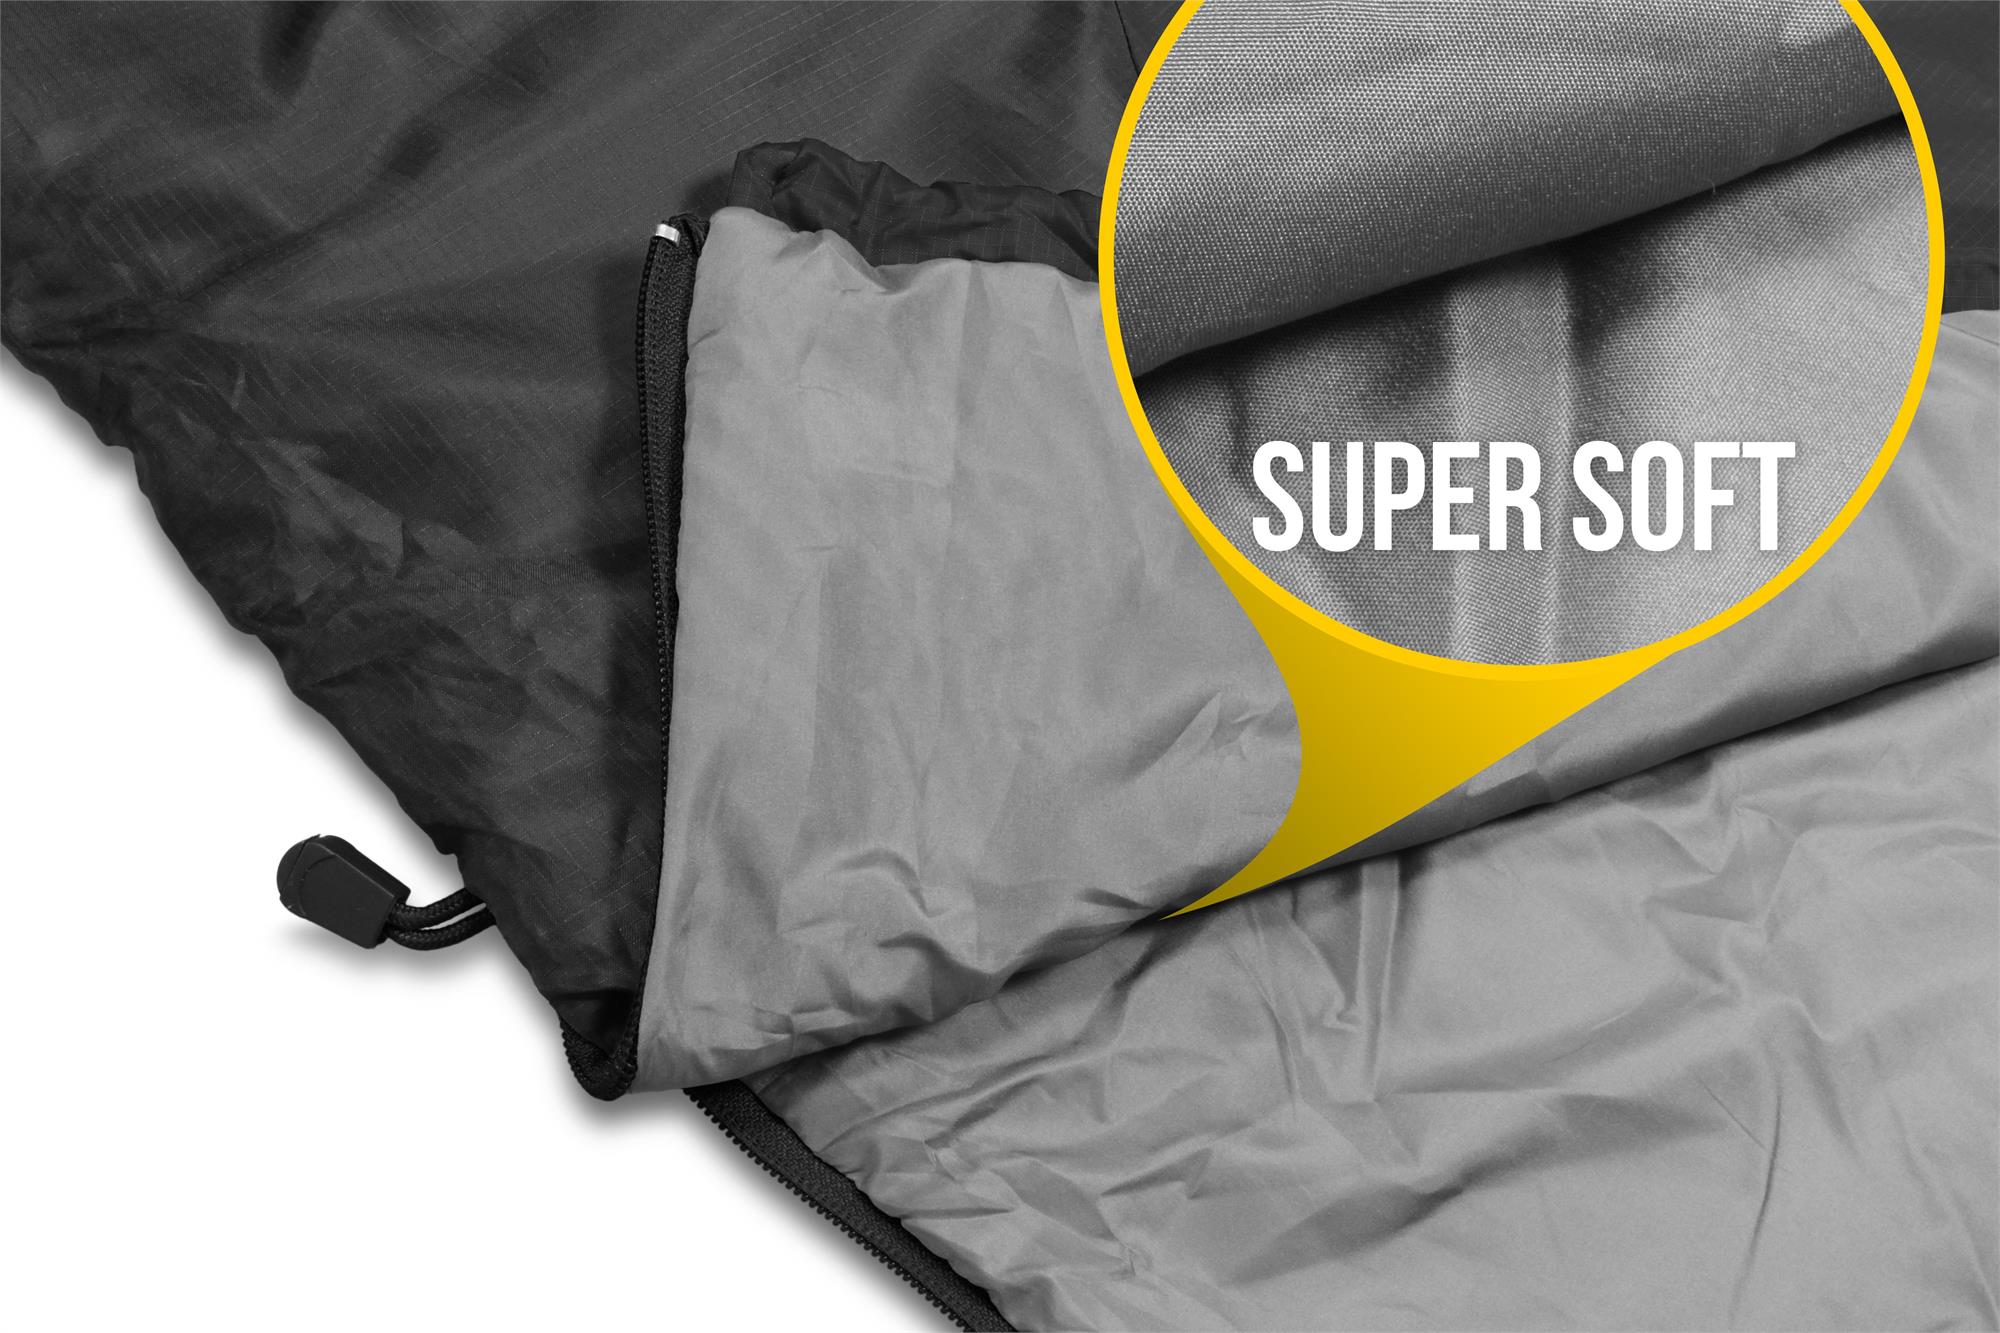 Ultra leichter Schlafsack kleines Packmaß Sommer - Camping Outdoor Decke Zelt